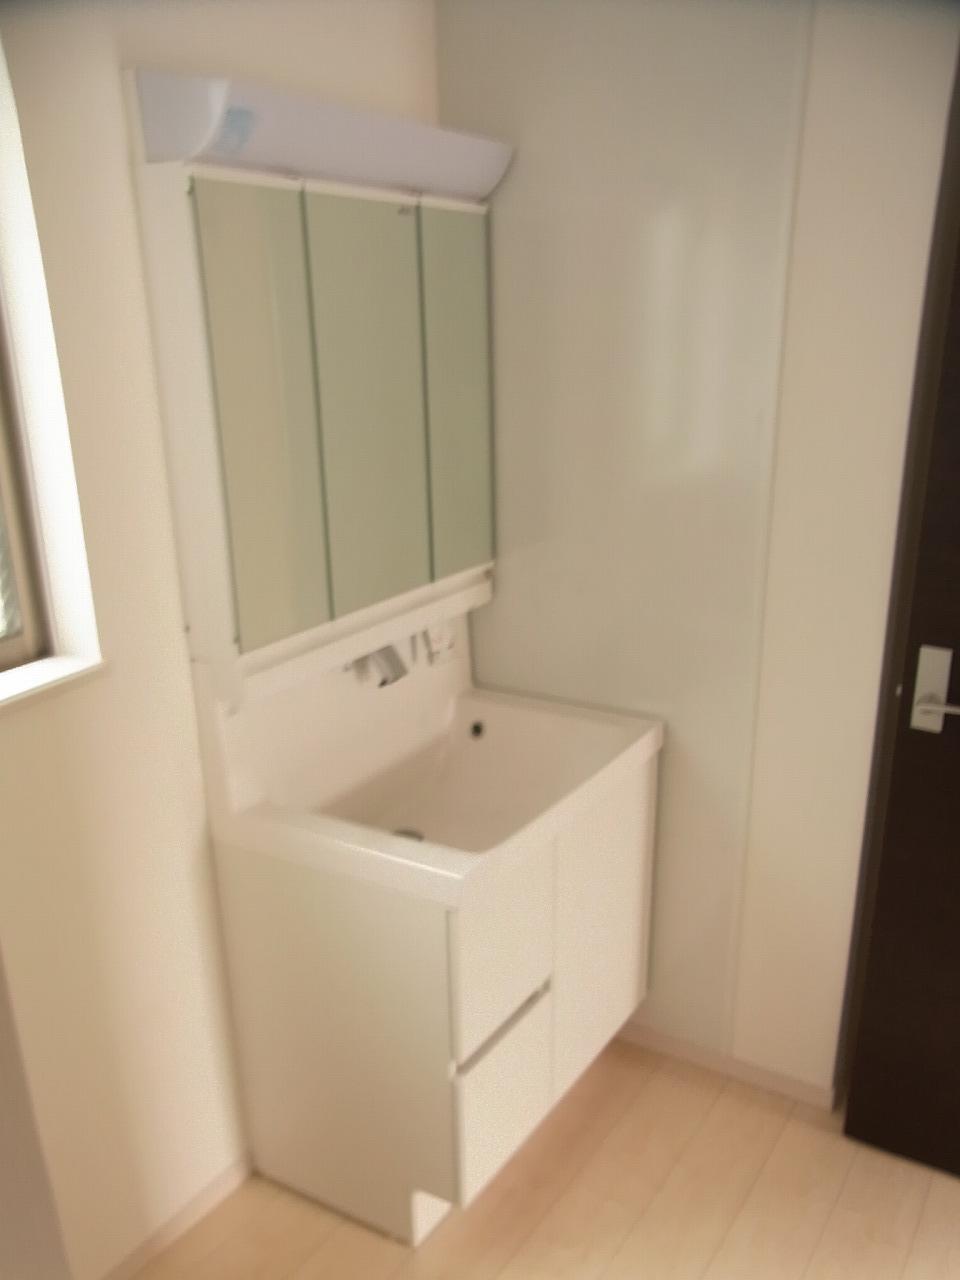 Wash basin, toilet. Vanity is three-sided mirror type